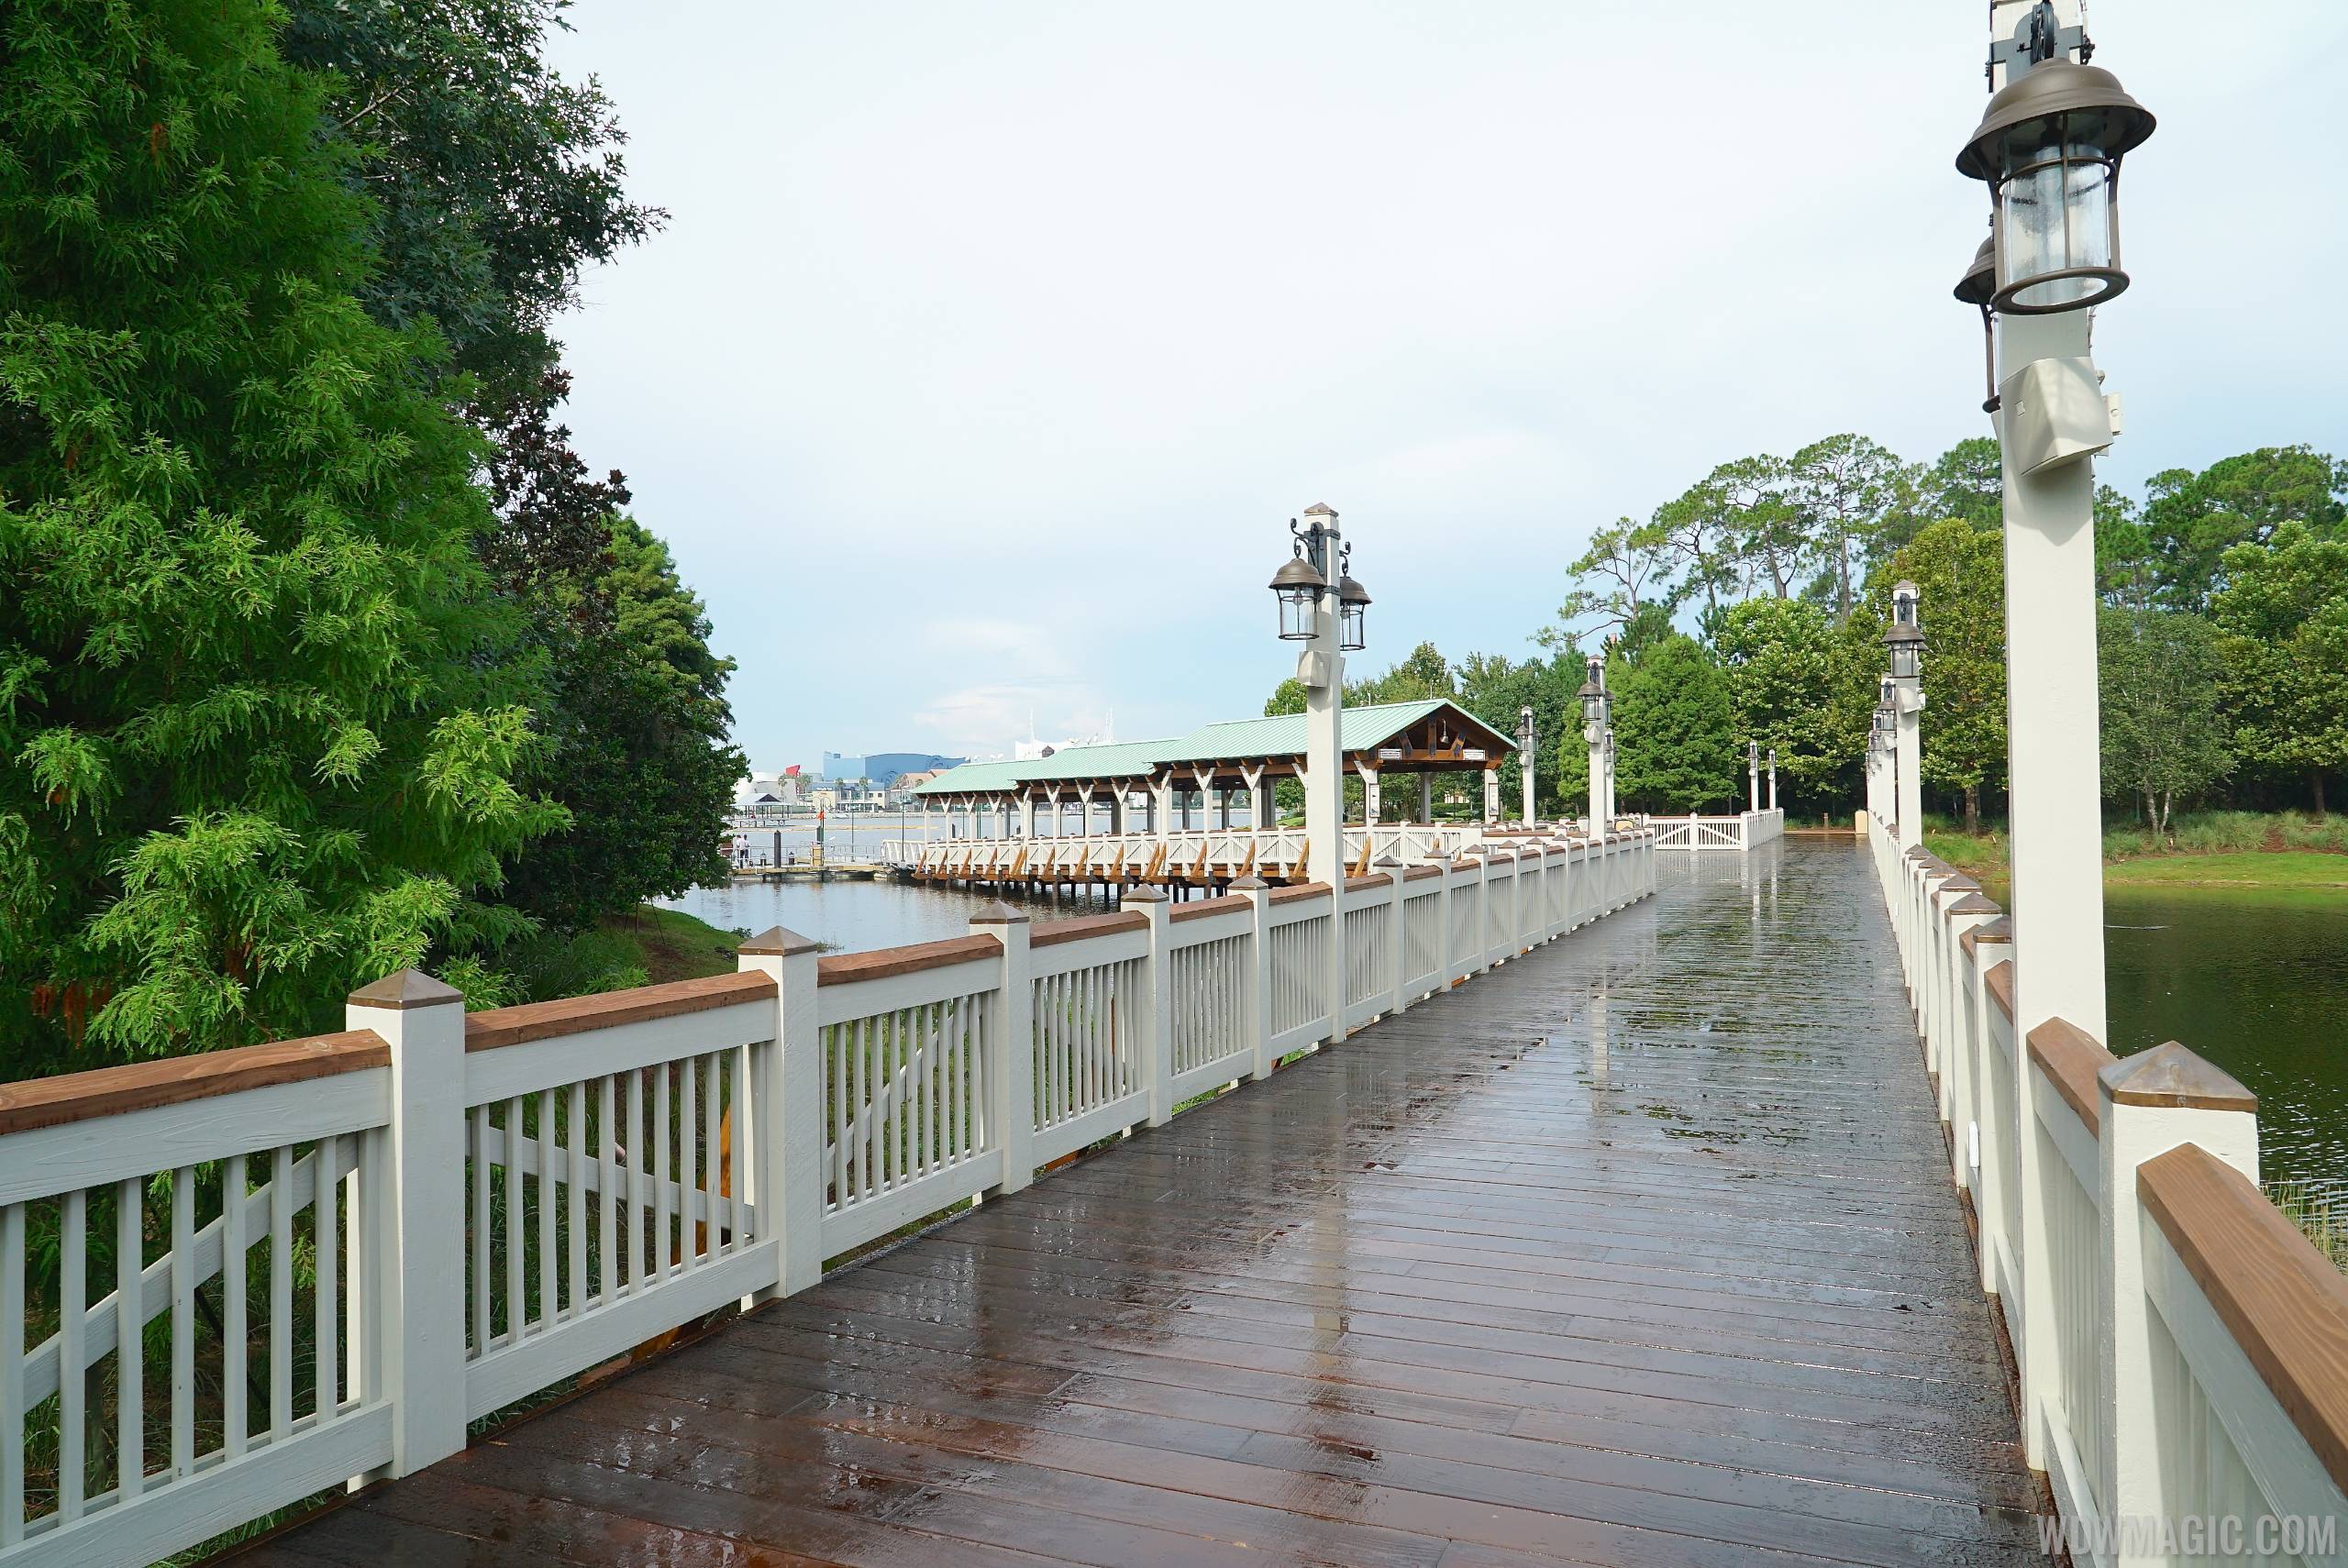 Marketplace to Saratoga Springs bridge and boat dock - The walkway